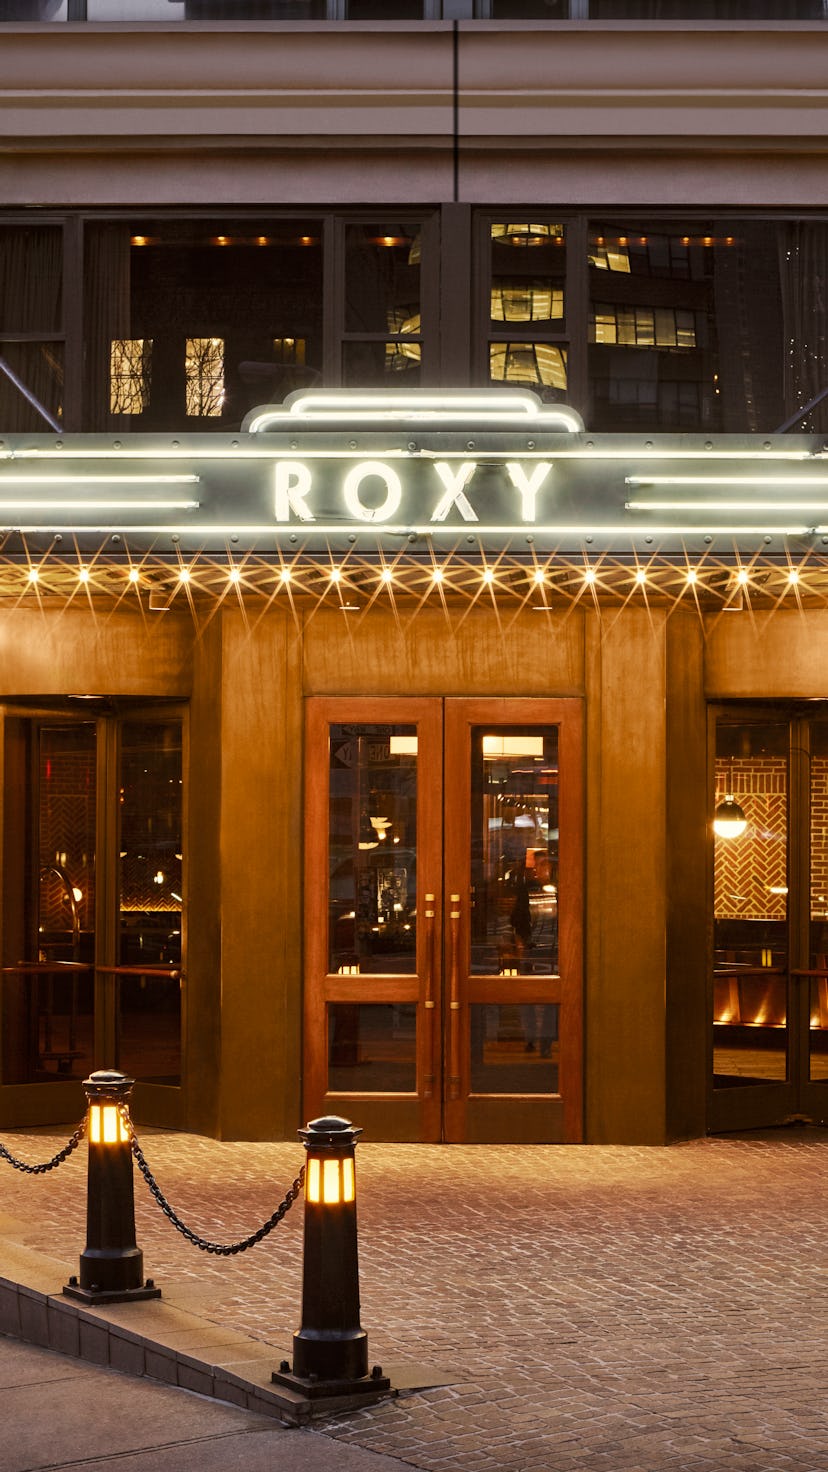 The Roxy Hotel's Jazz Club Feels Like New York City's Best-Kept Secret